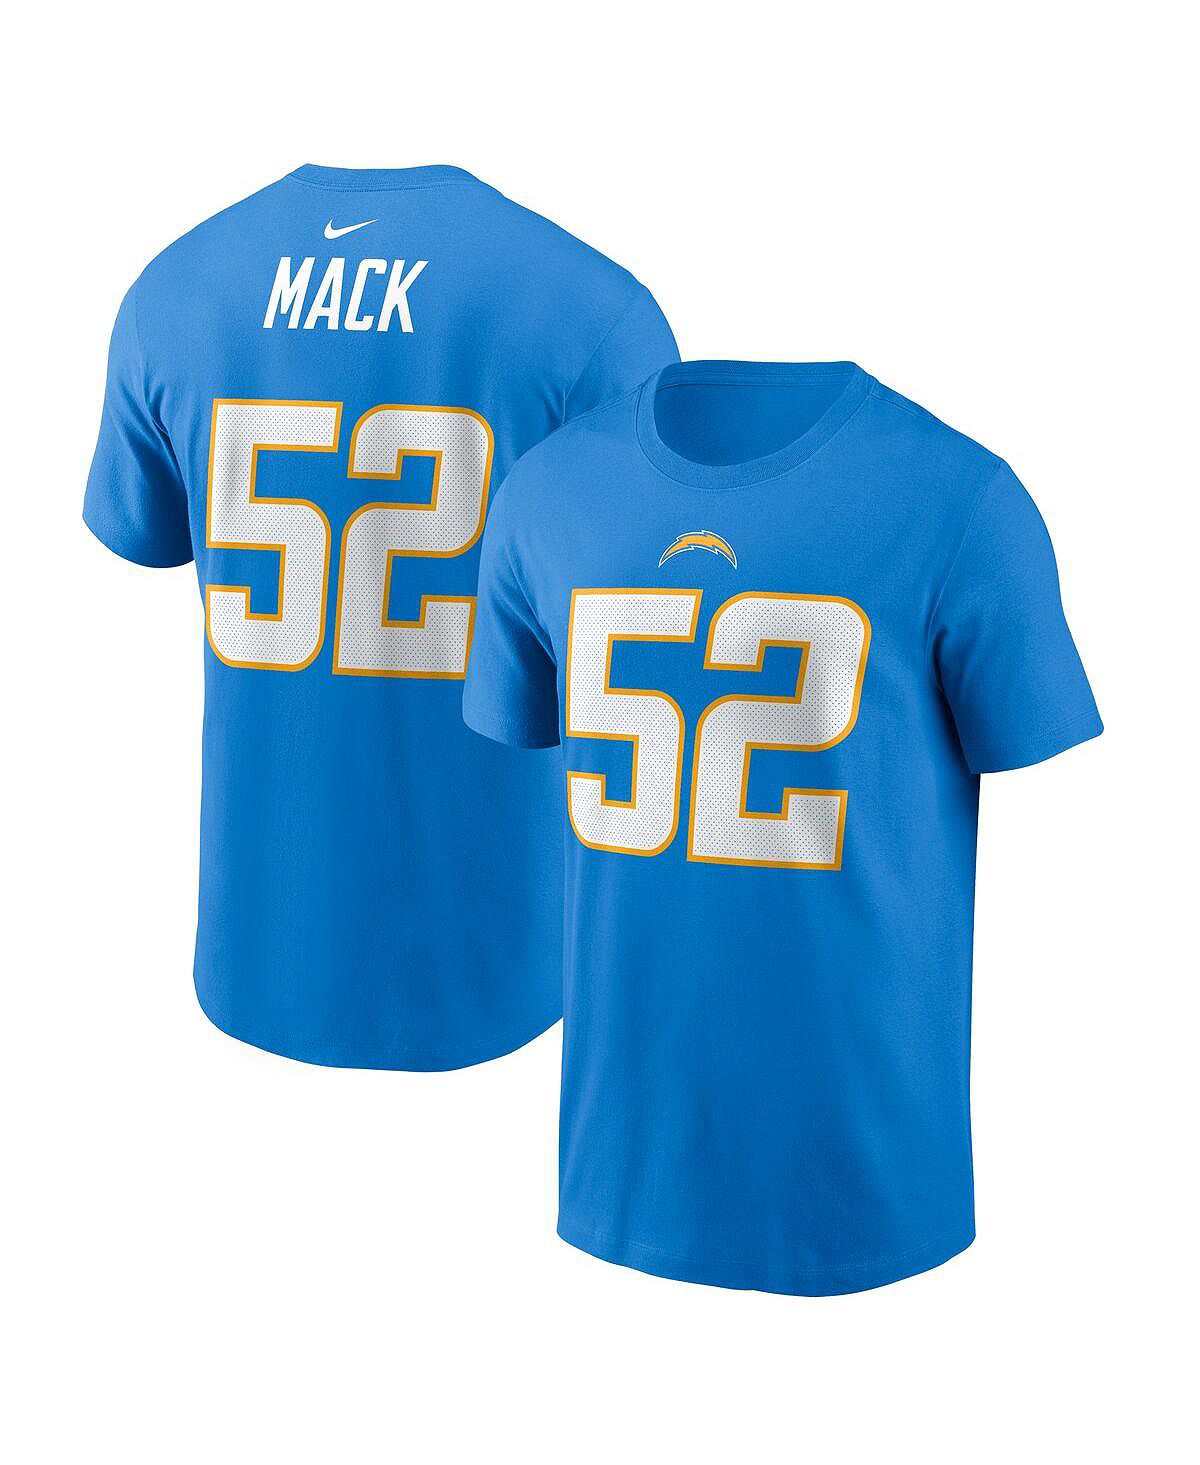 Мужская футболка khalil mack powder blue los angeles chargers с именем и номером игрока Nike, синий джибран халил пророк